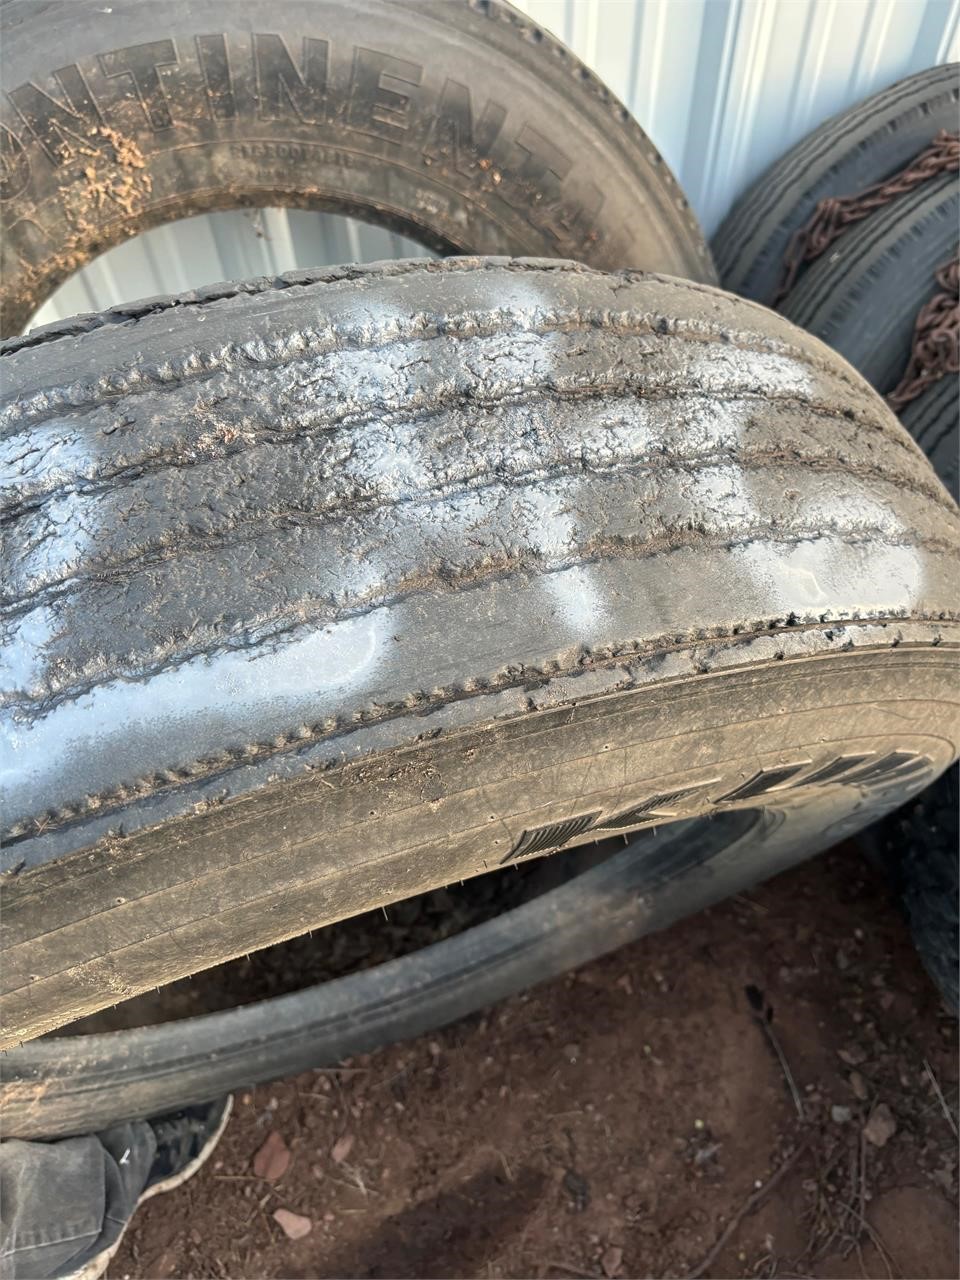 Used semi tire